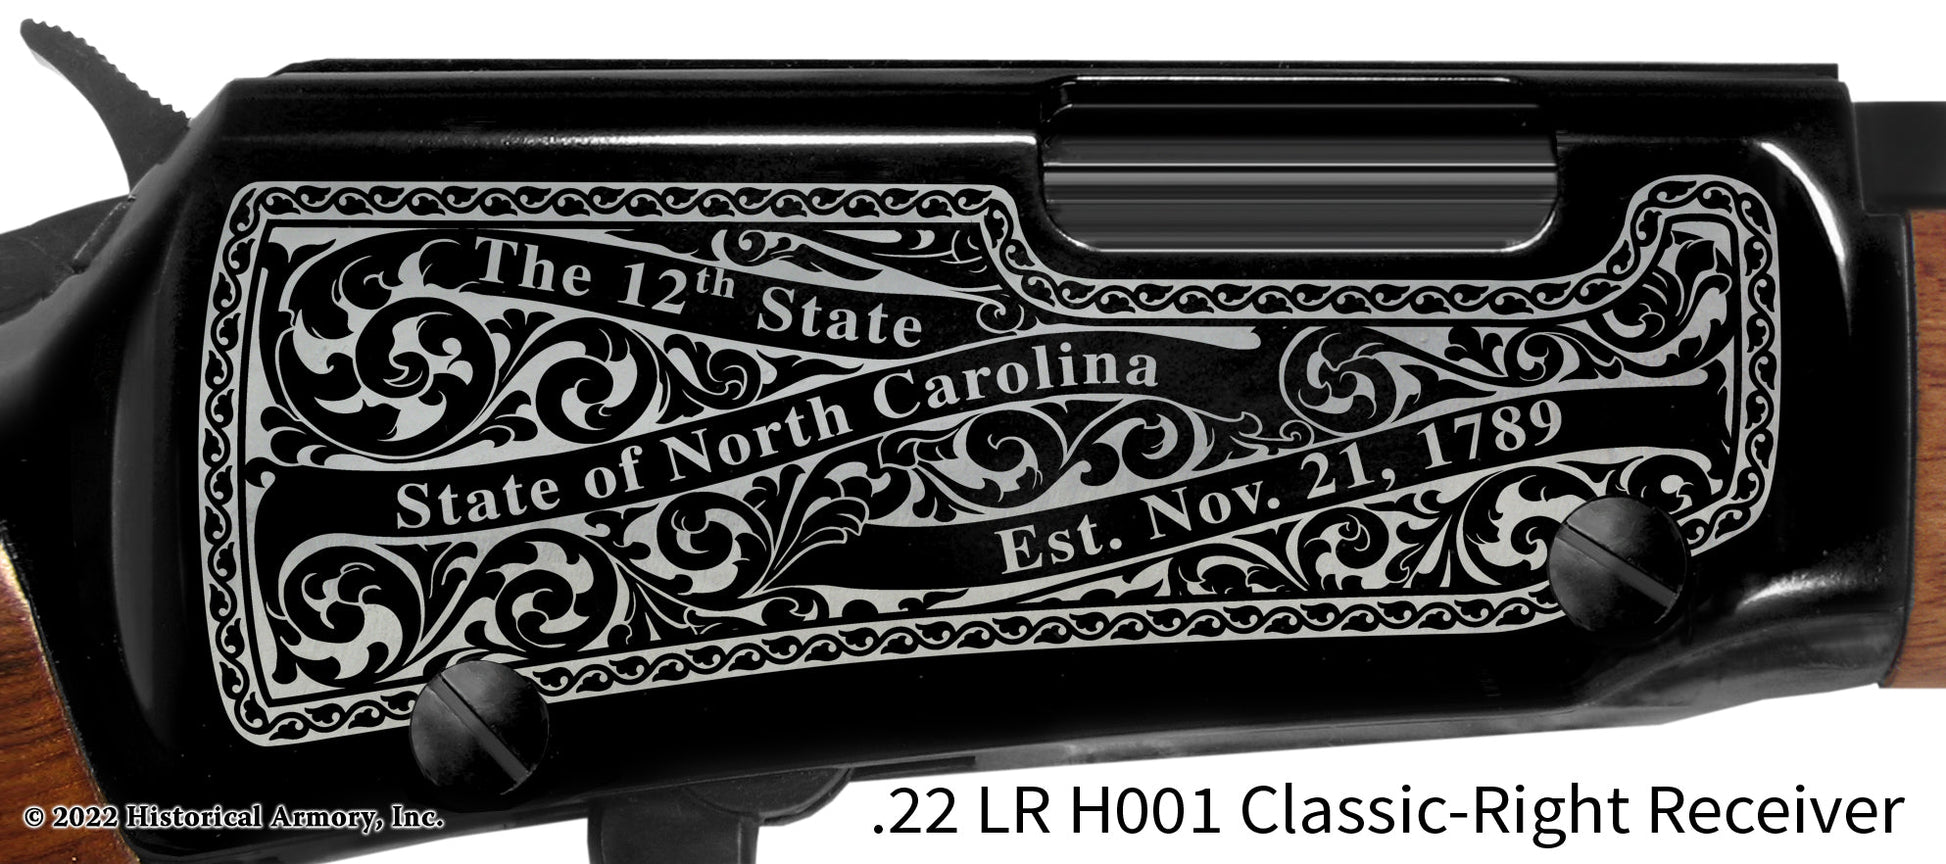 Bertie County North Carolina Engraved Henry H001 Rifle